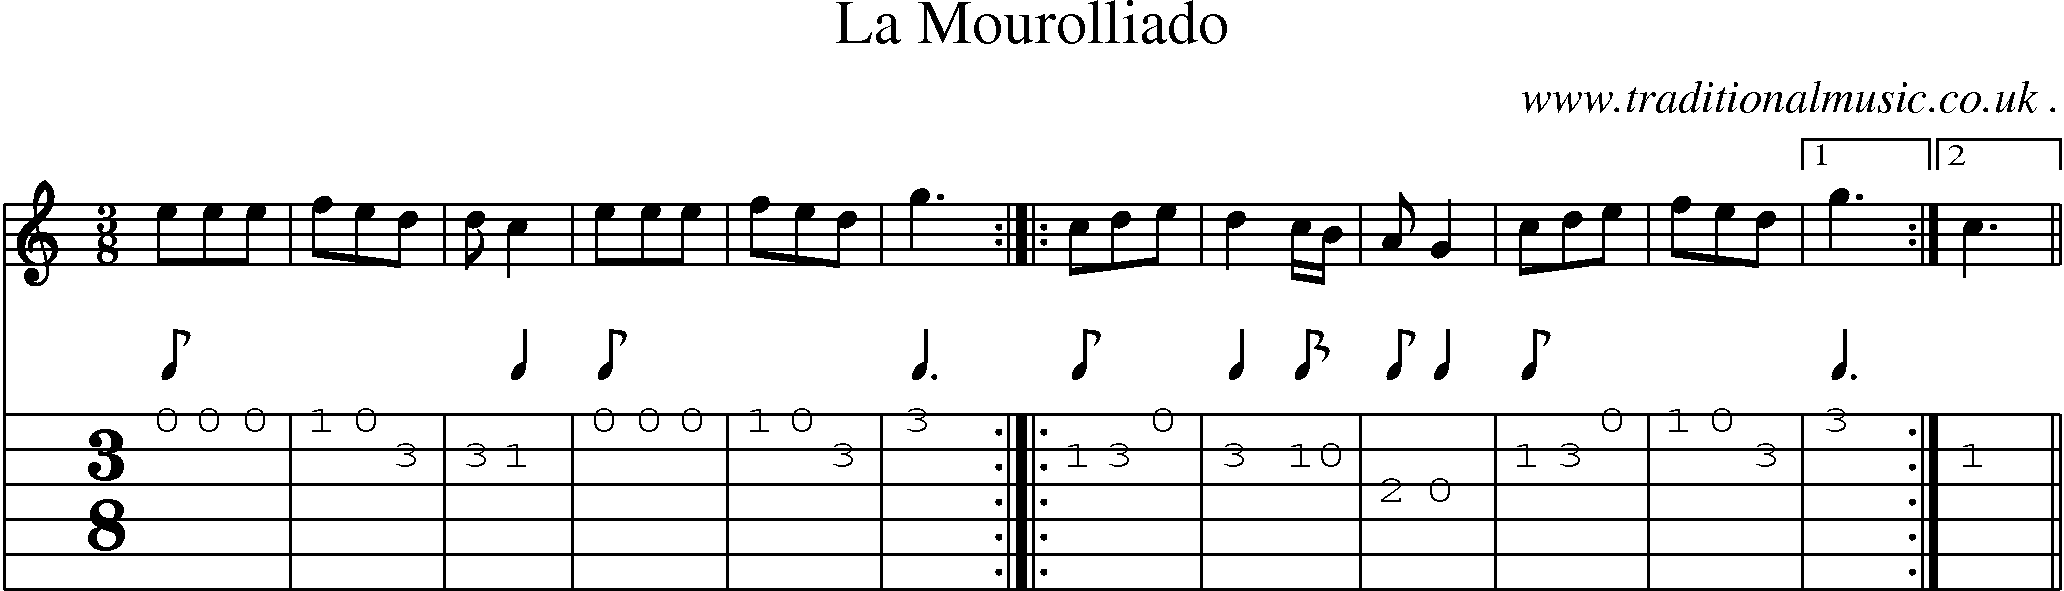 Sheet-Music and Guitar Tabs for La Mourolliado